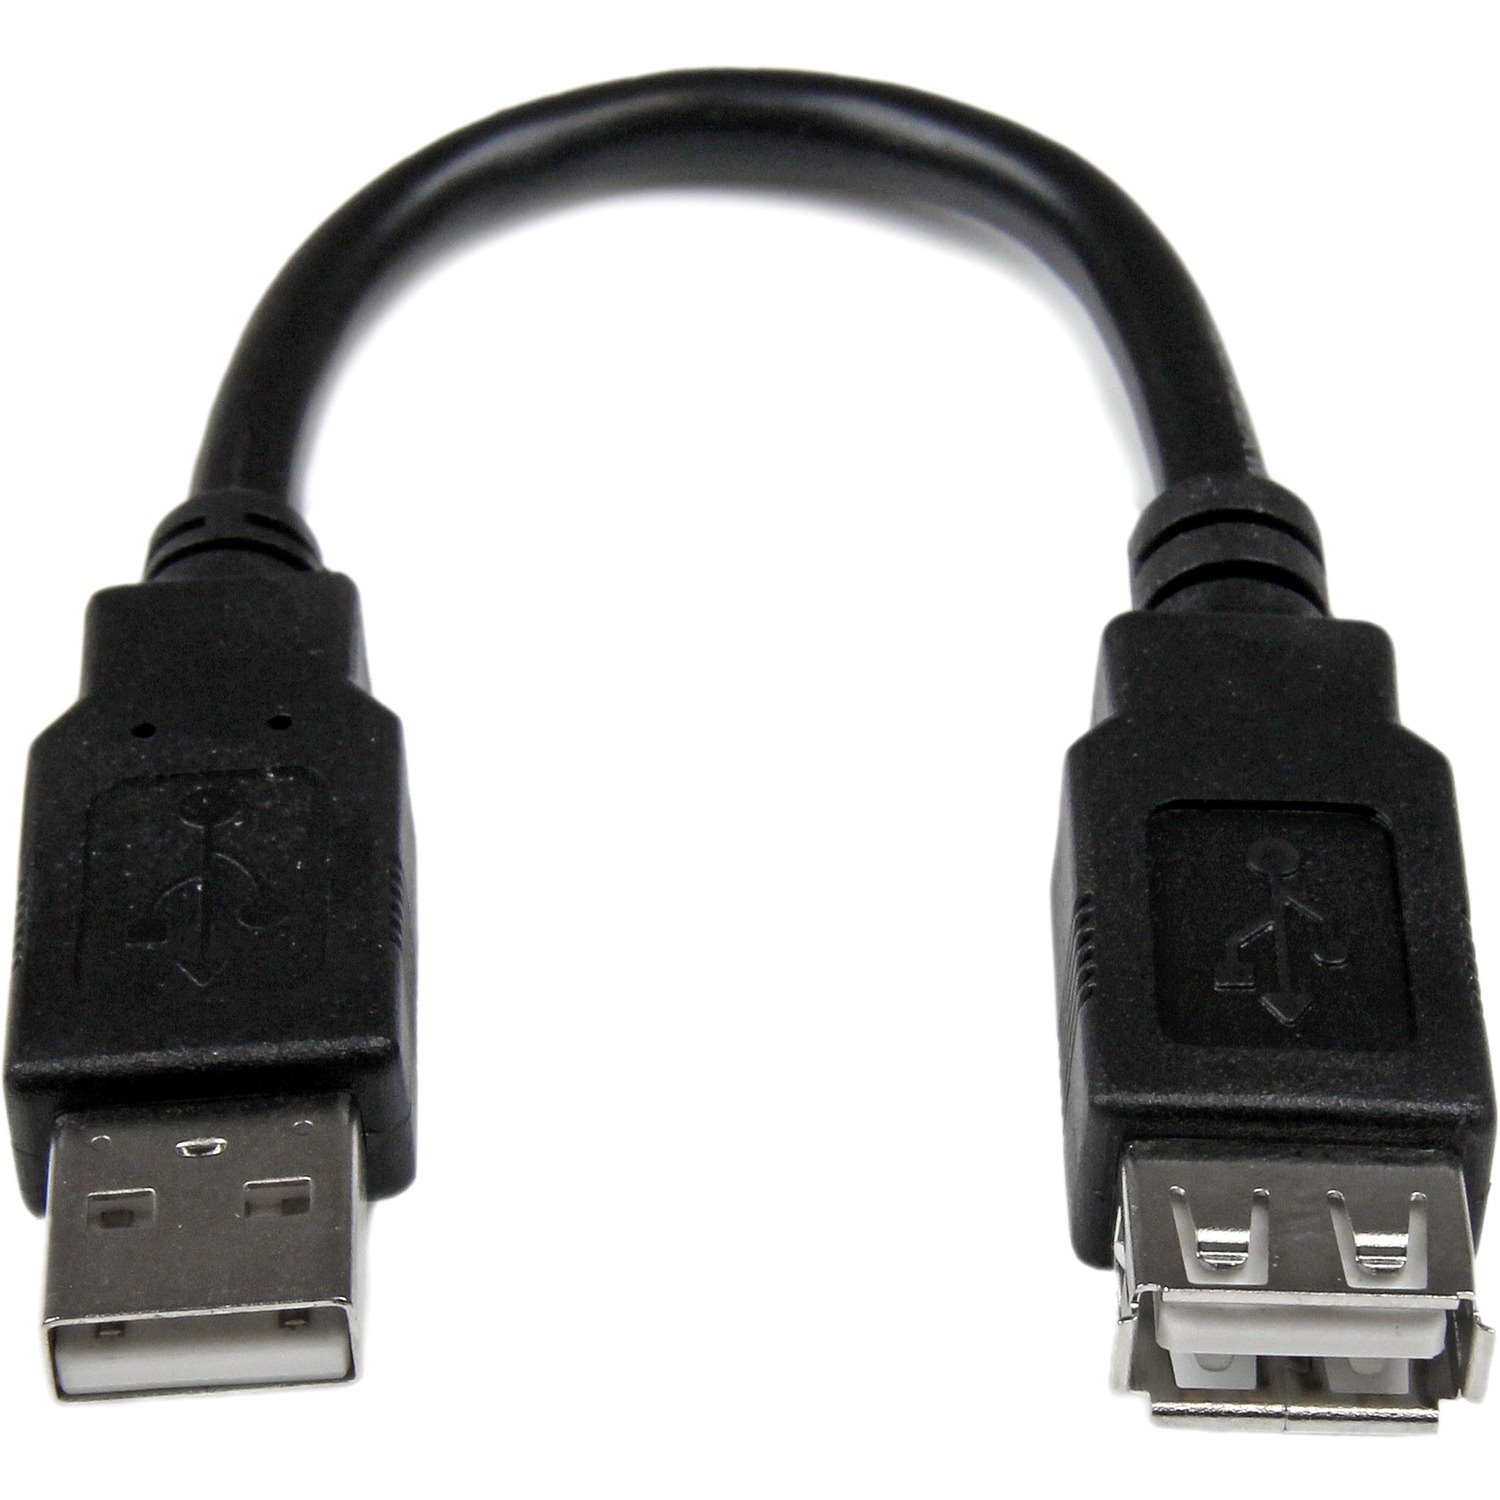 StarTech.com 15.24 cm USB Data Transfer Cable for Notebook, Flash Drive, Desktop Computer - 1